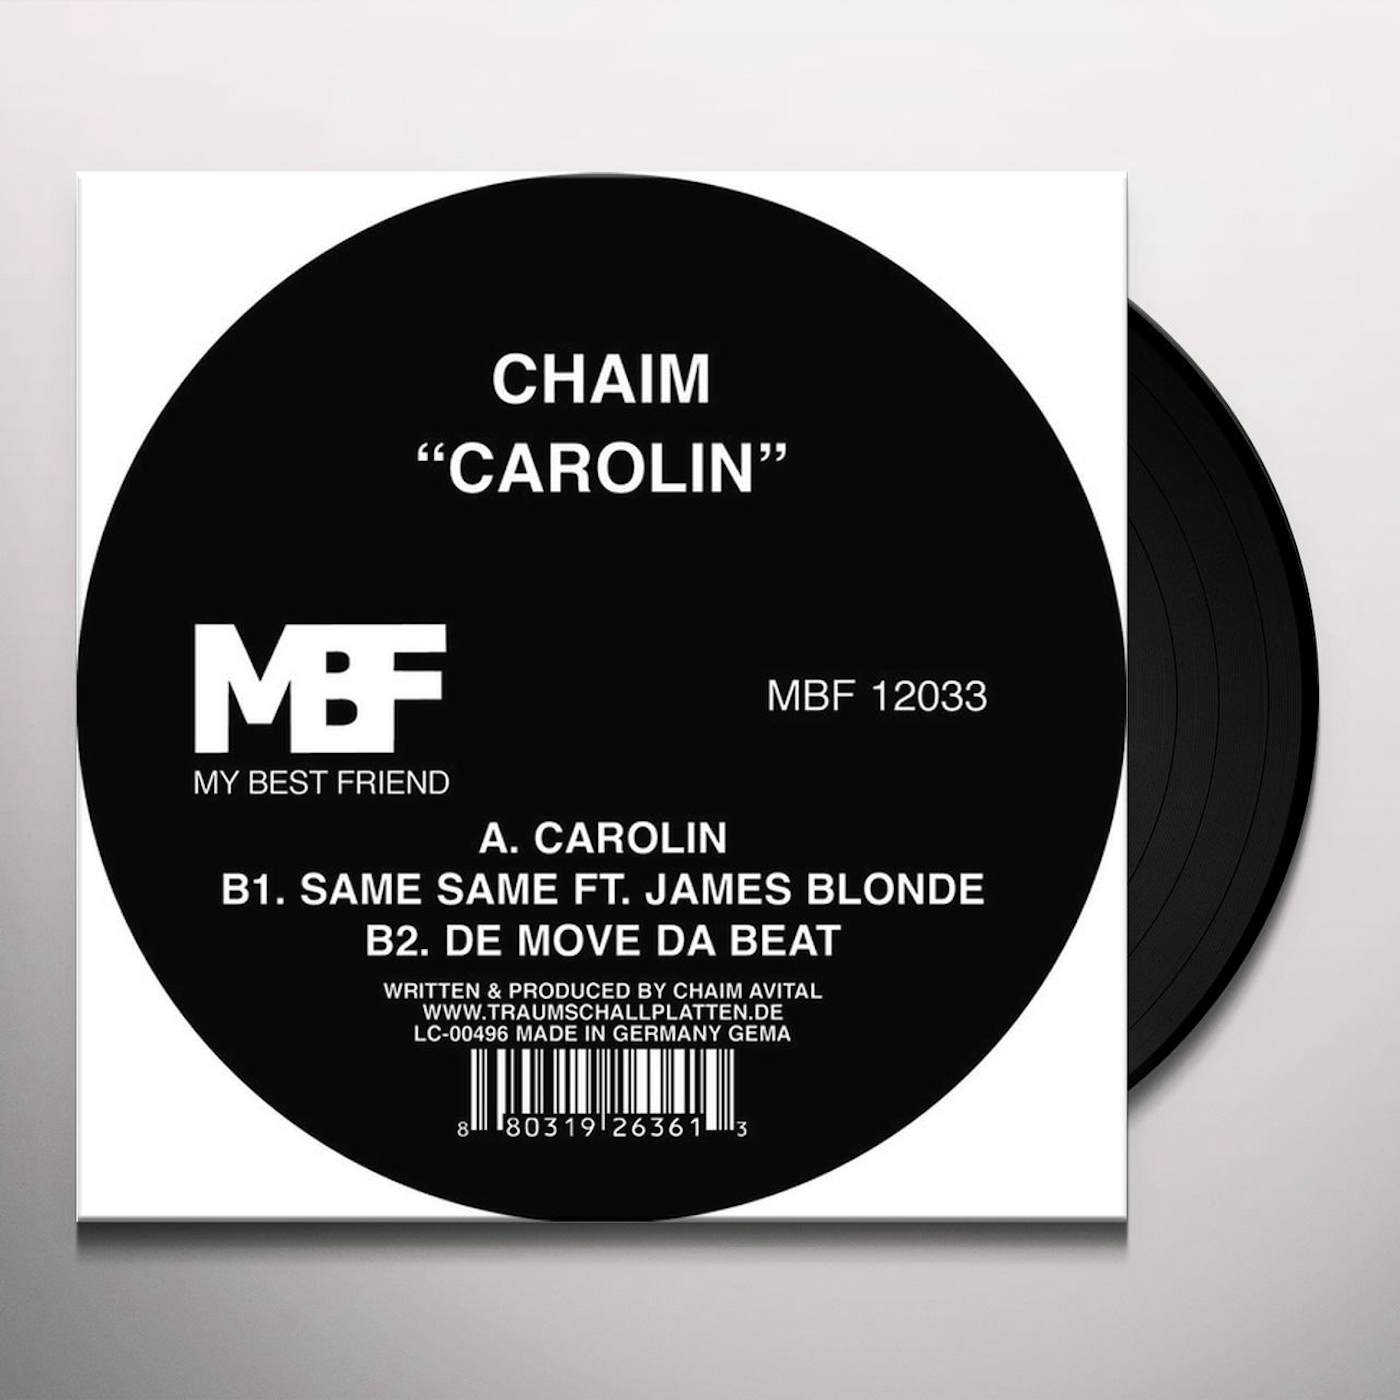 Chaim CAROLINE Vinyl Record